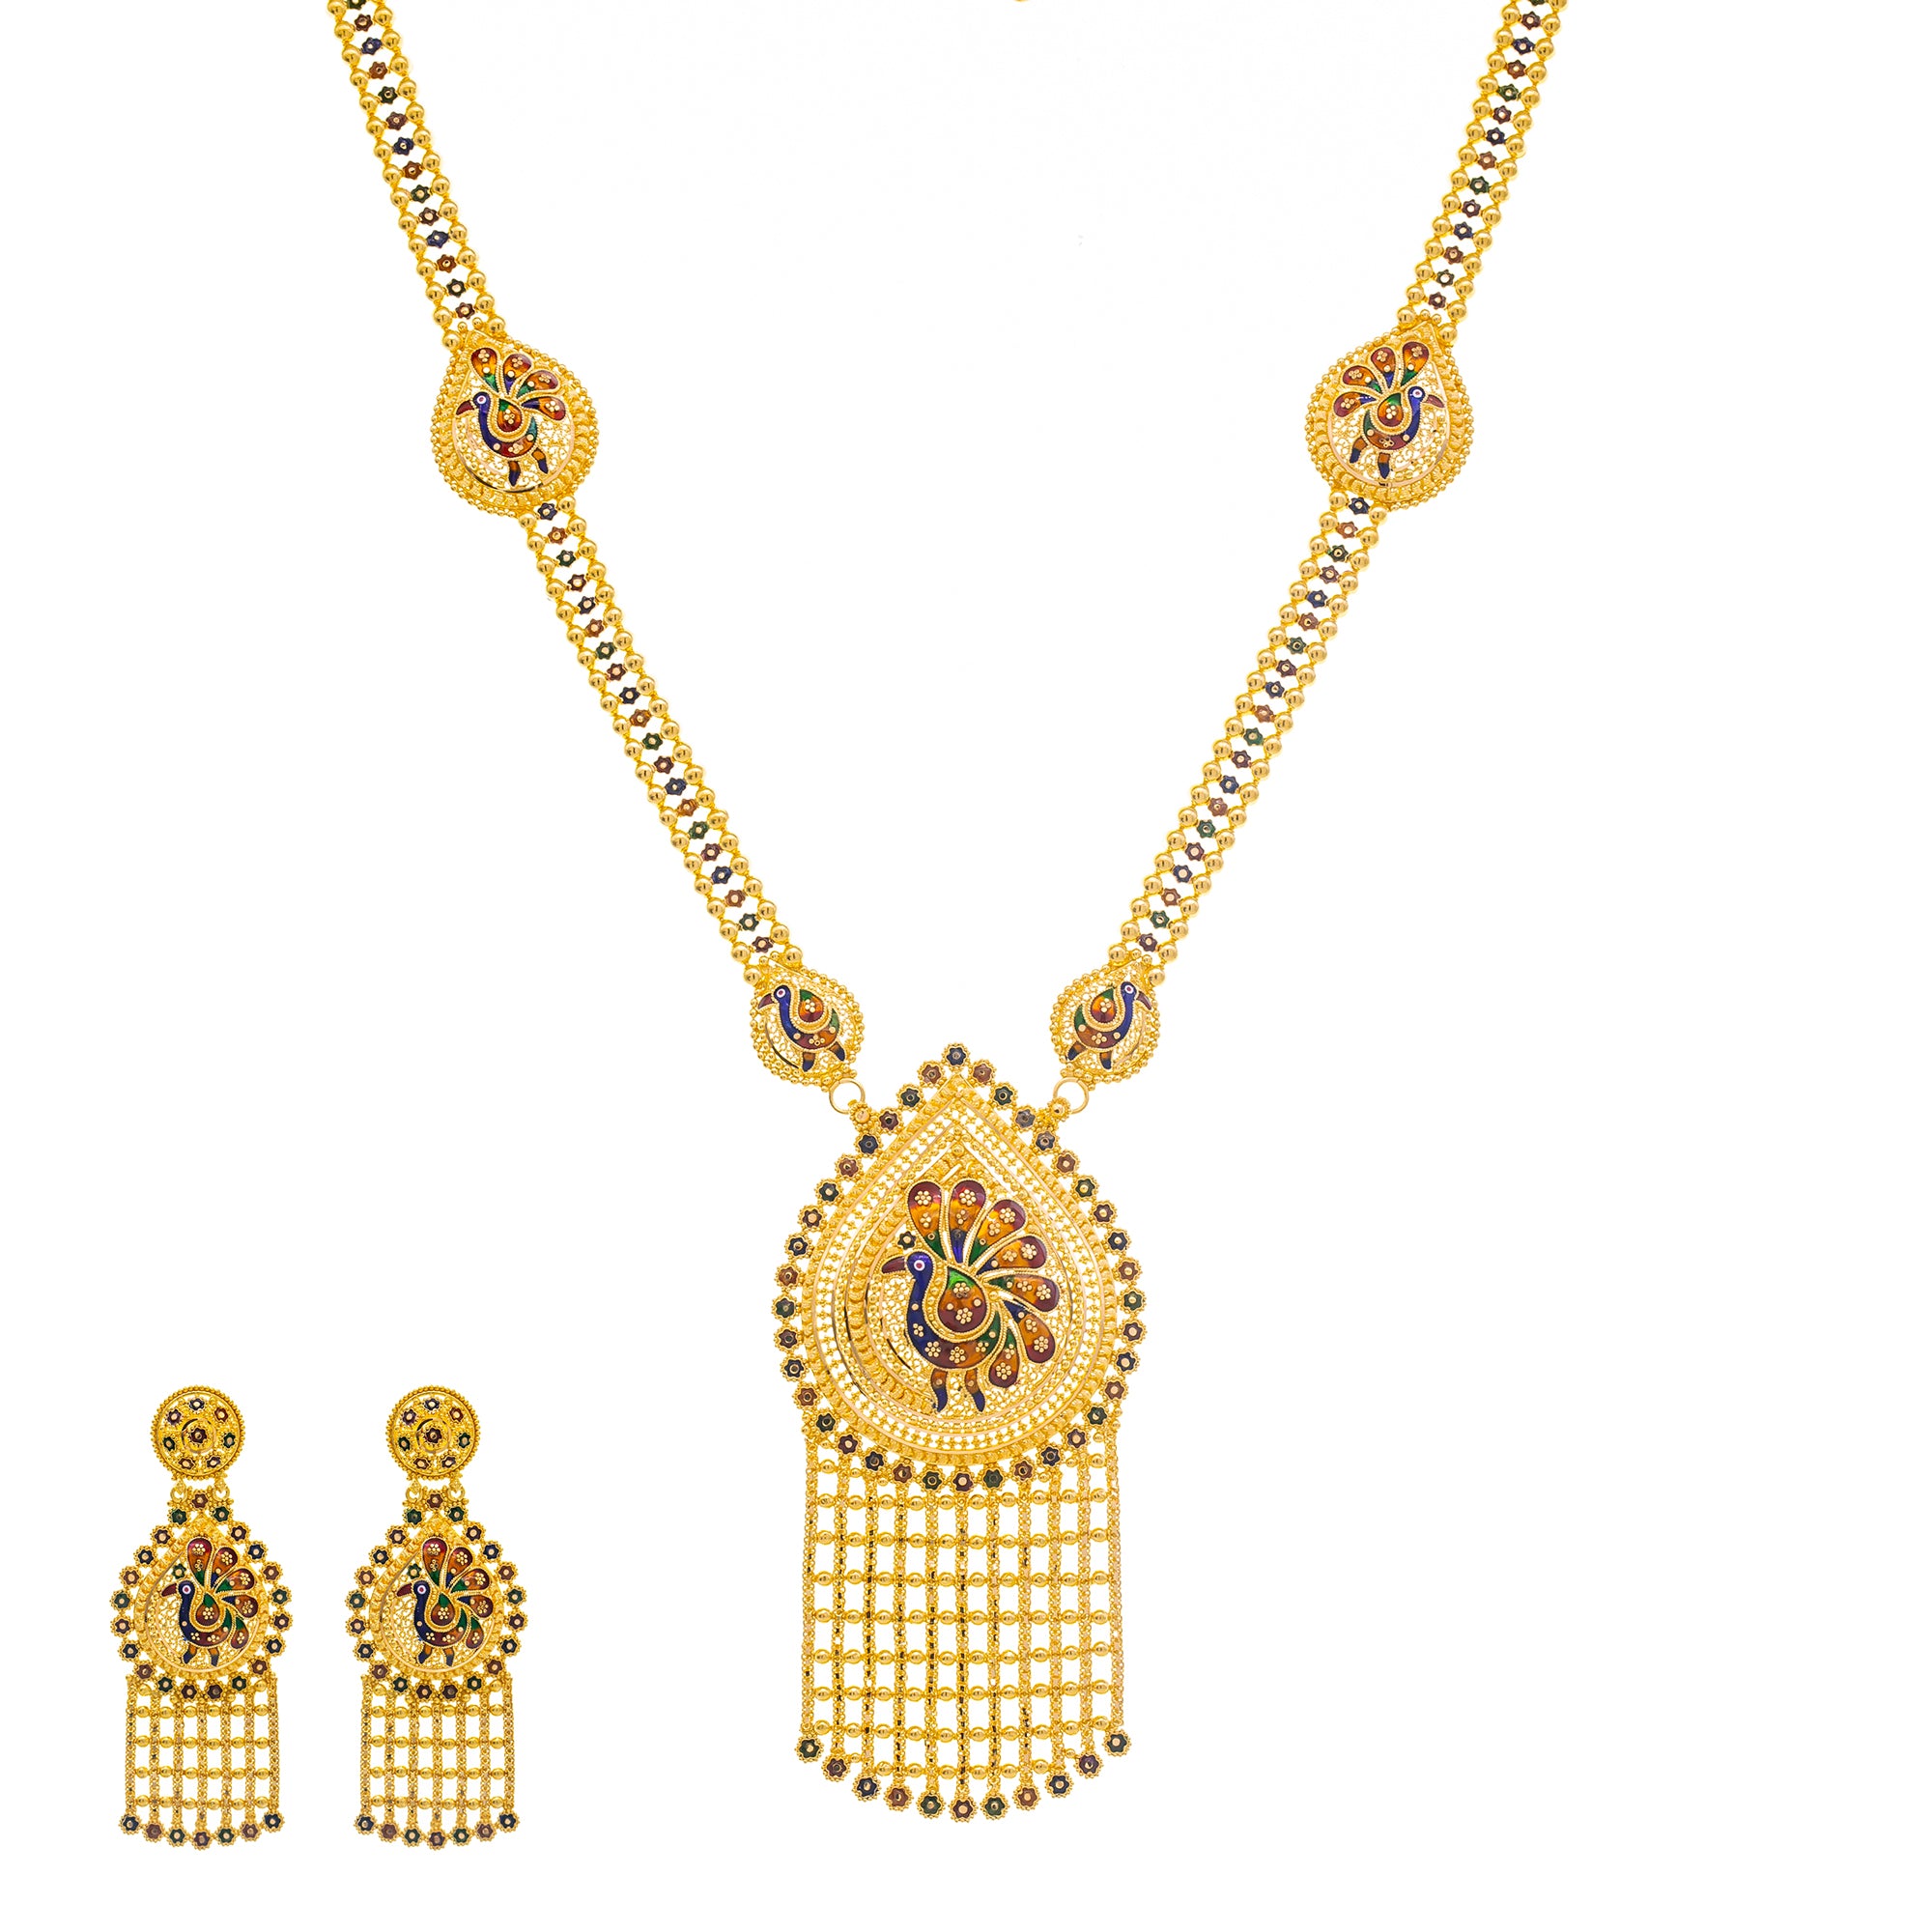 Indian 22K Gold Plated Wedding Choker Necklace Earrings 8'' Long Set ja476  | eBay